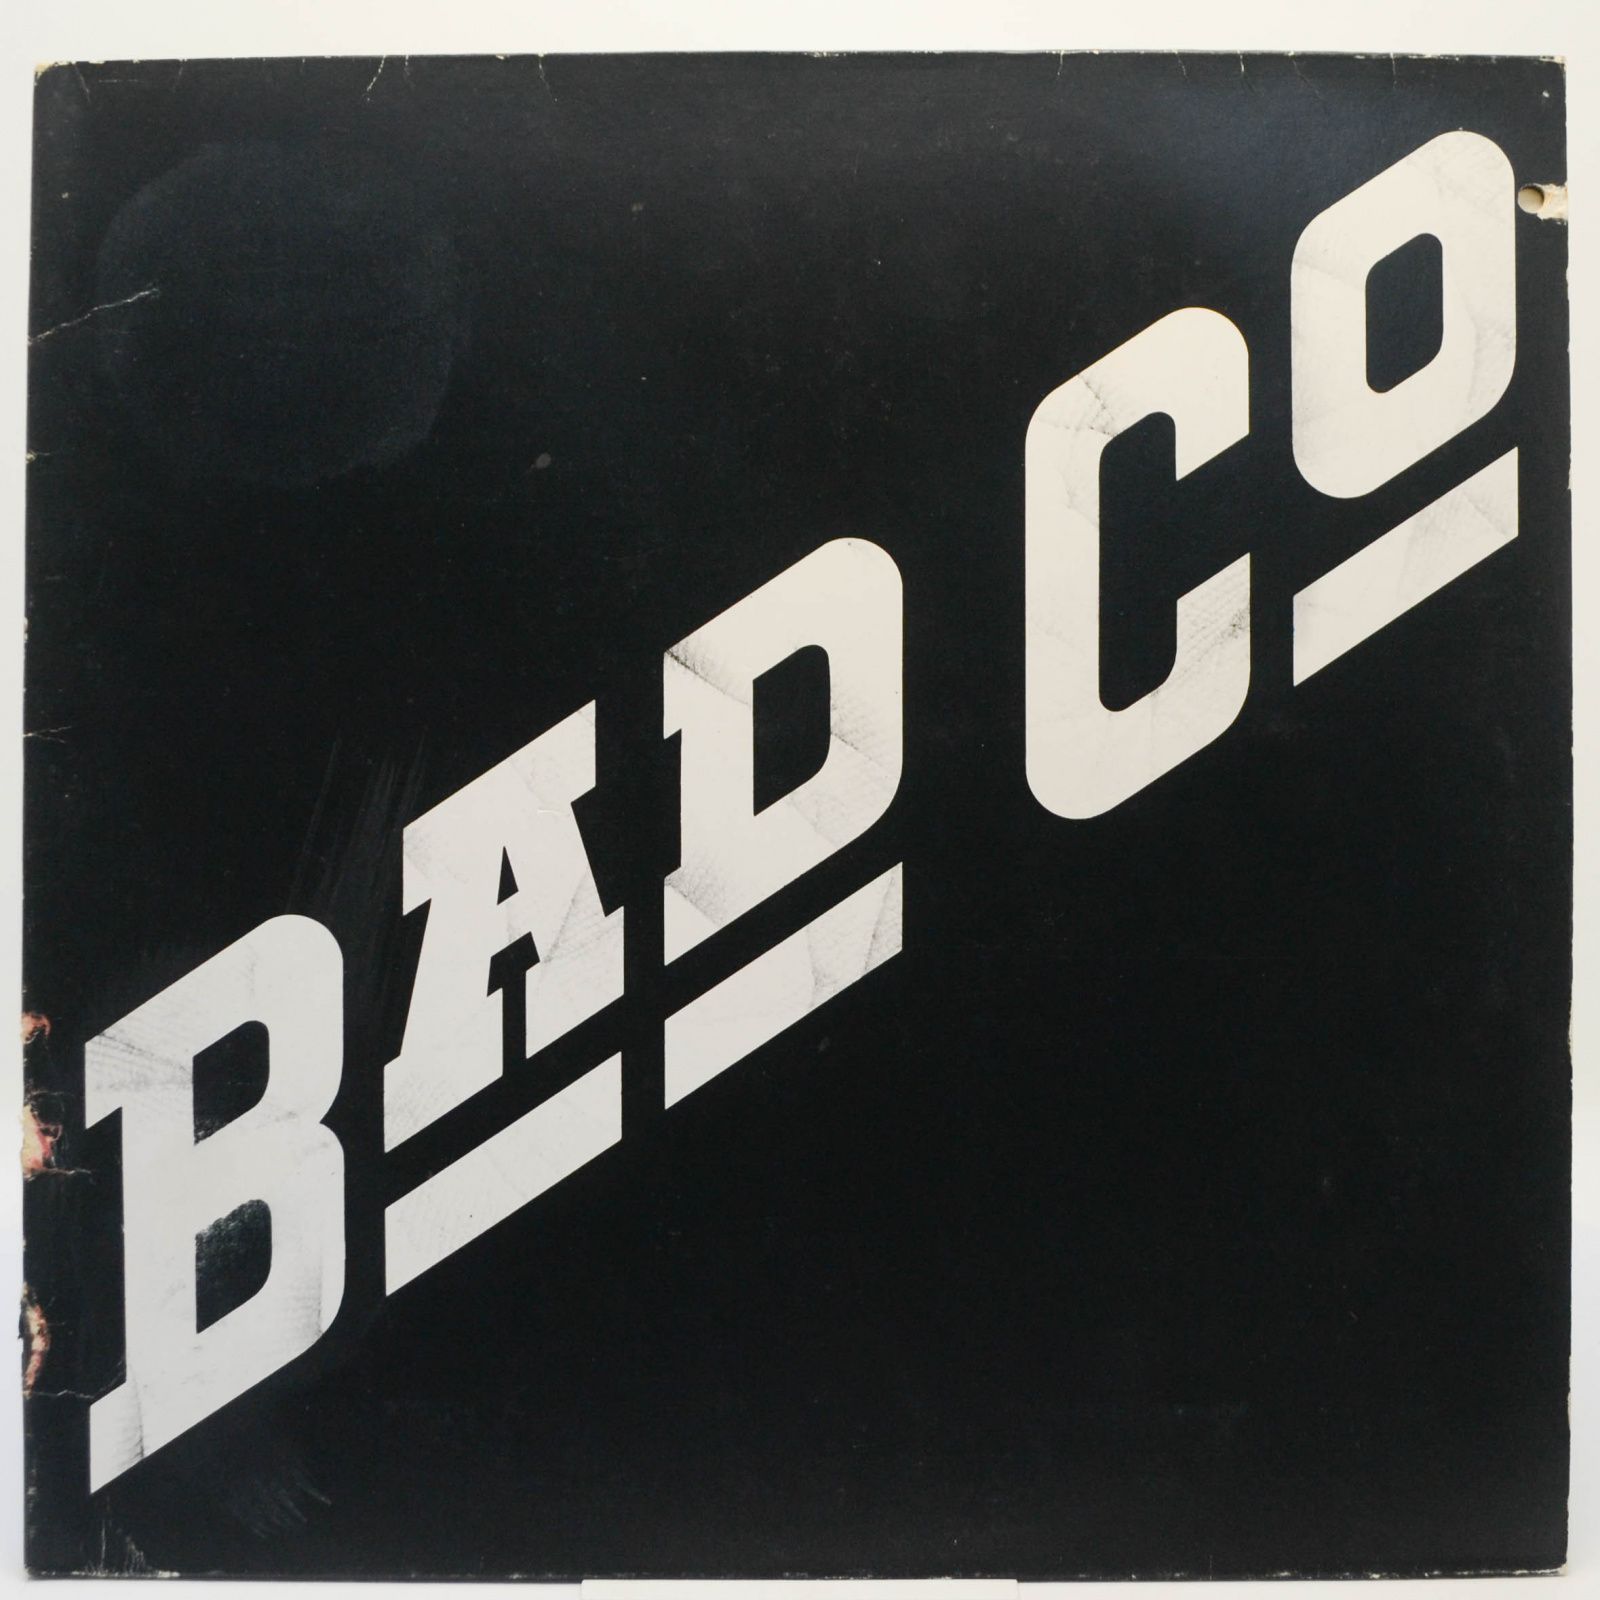 Bad Company — Bad Co., 1974